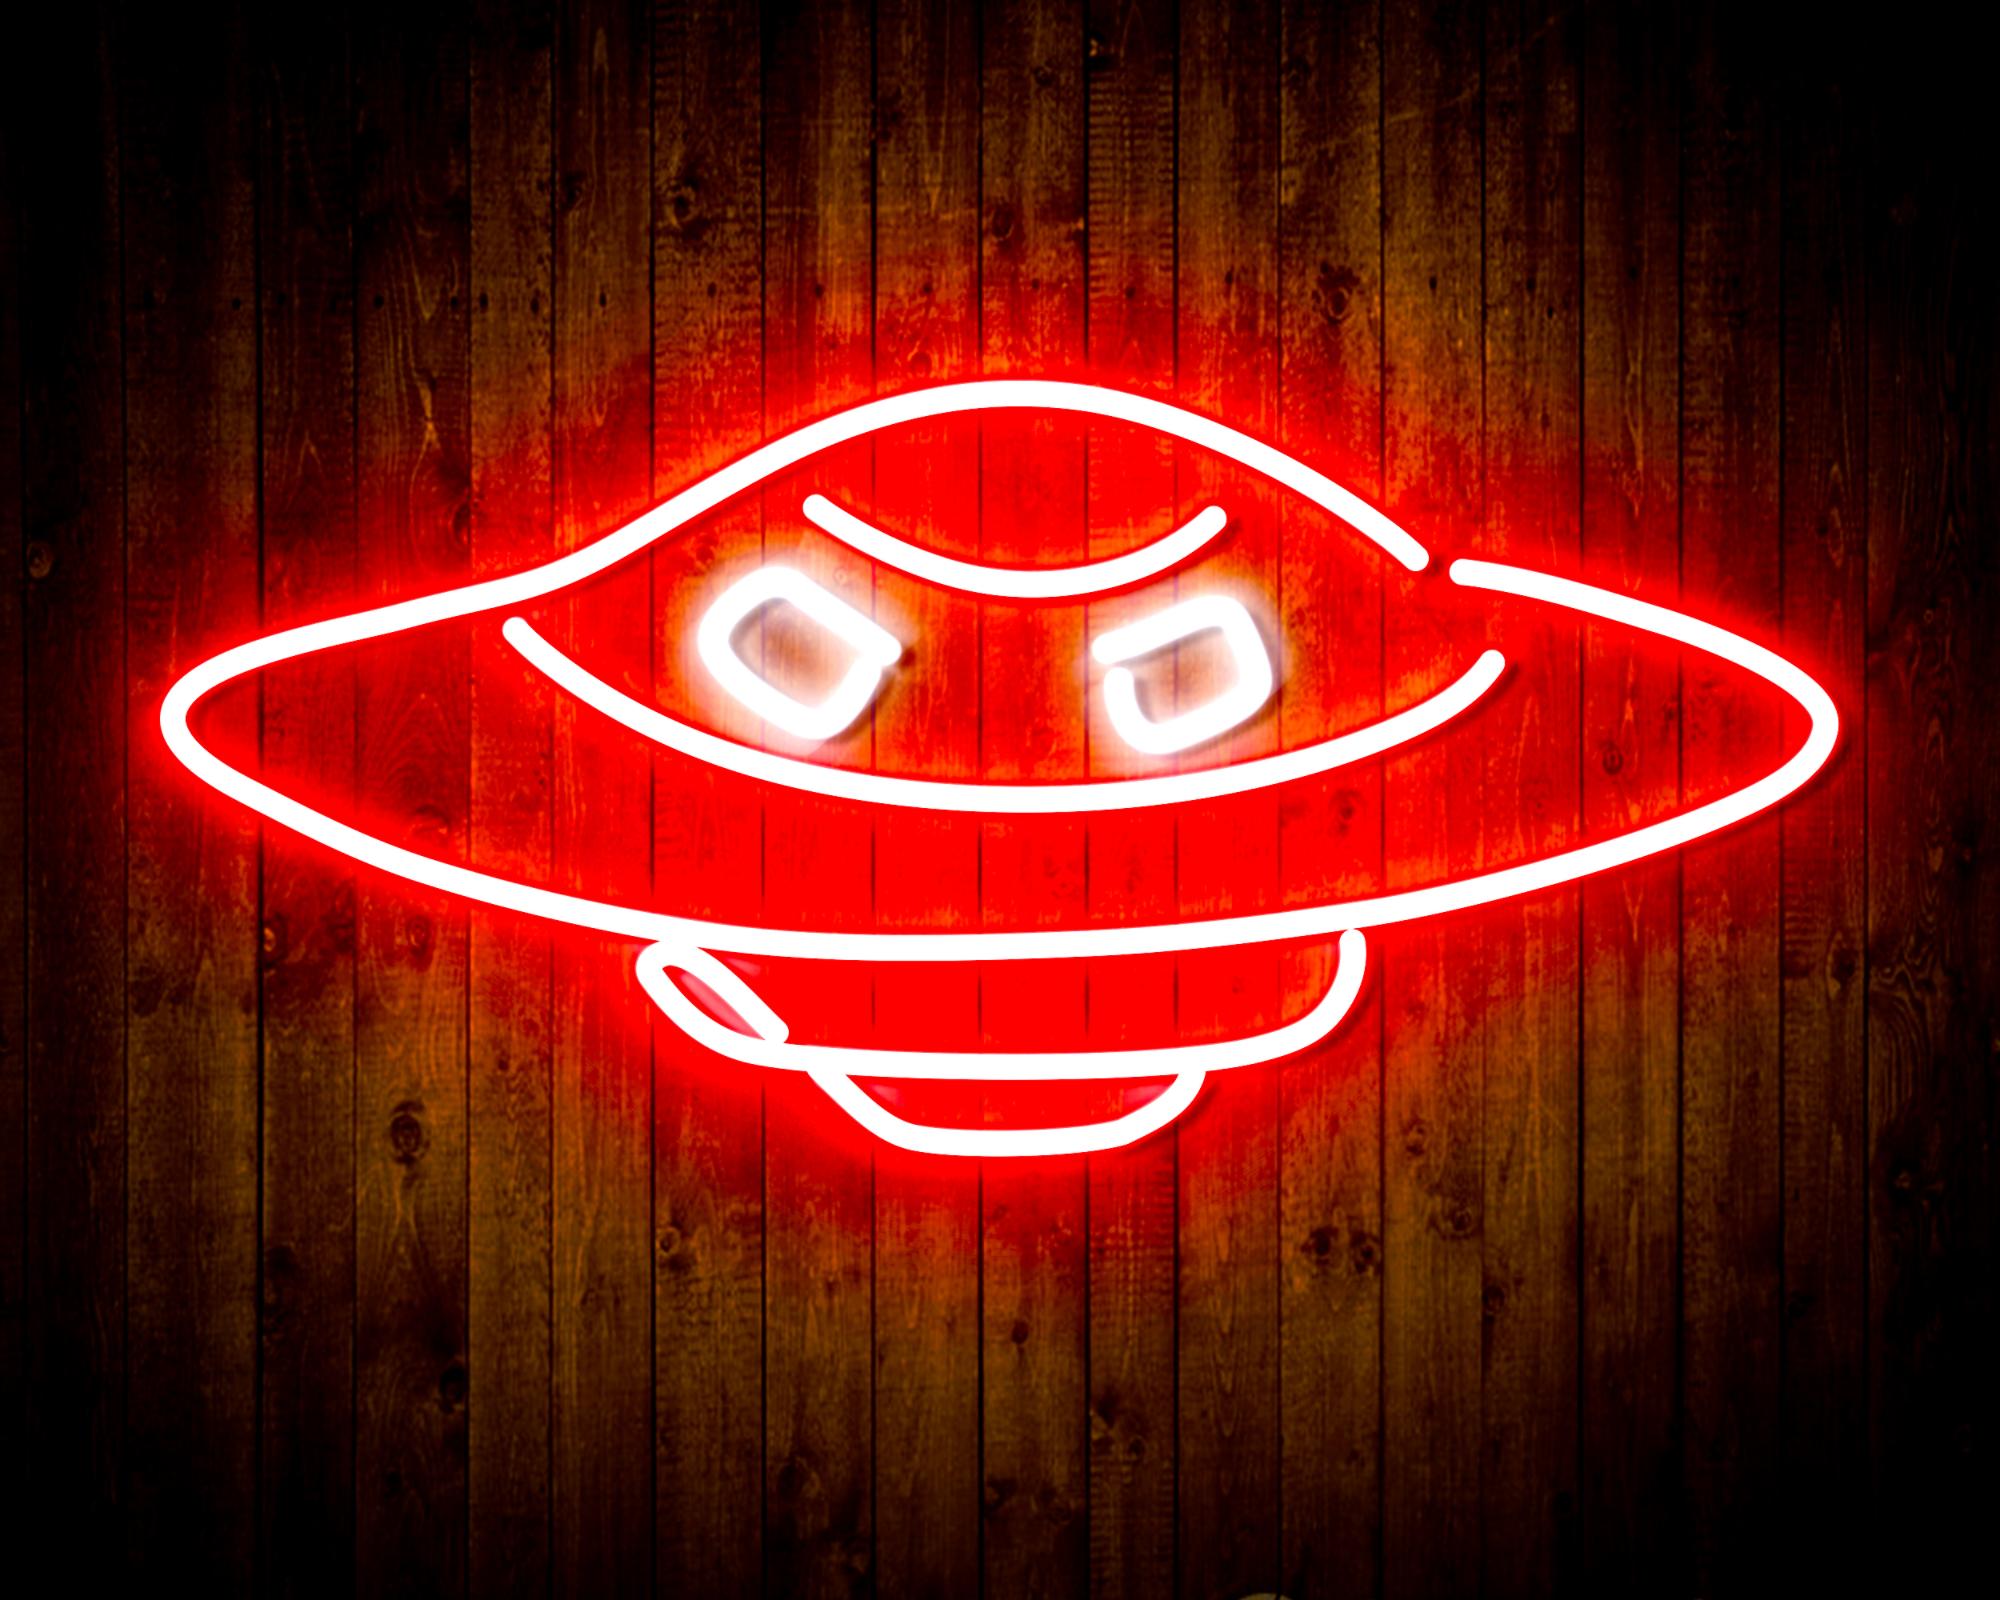 UFO LED Neon Sign Wall Light